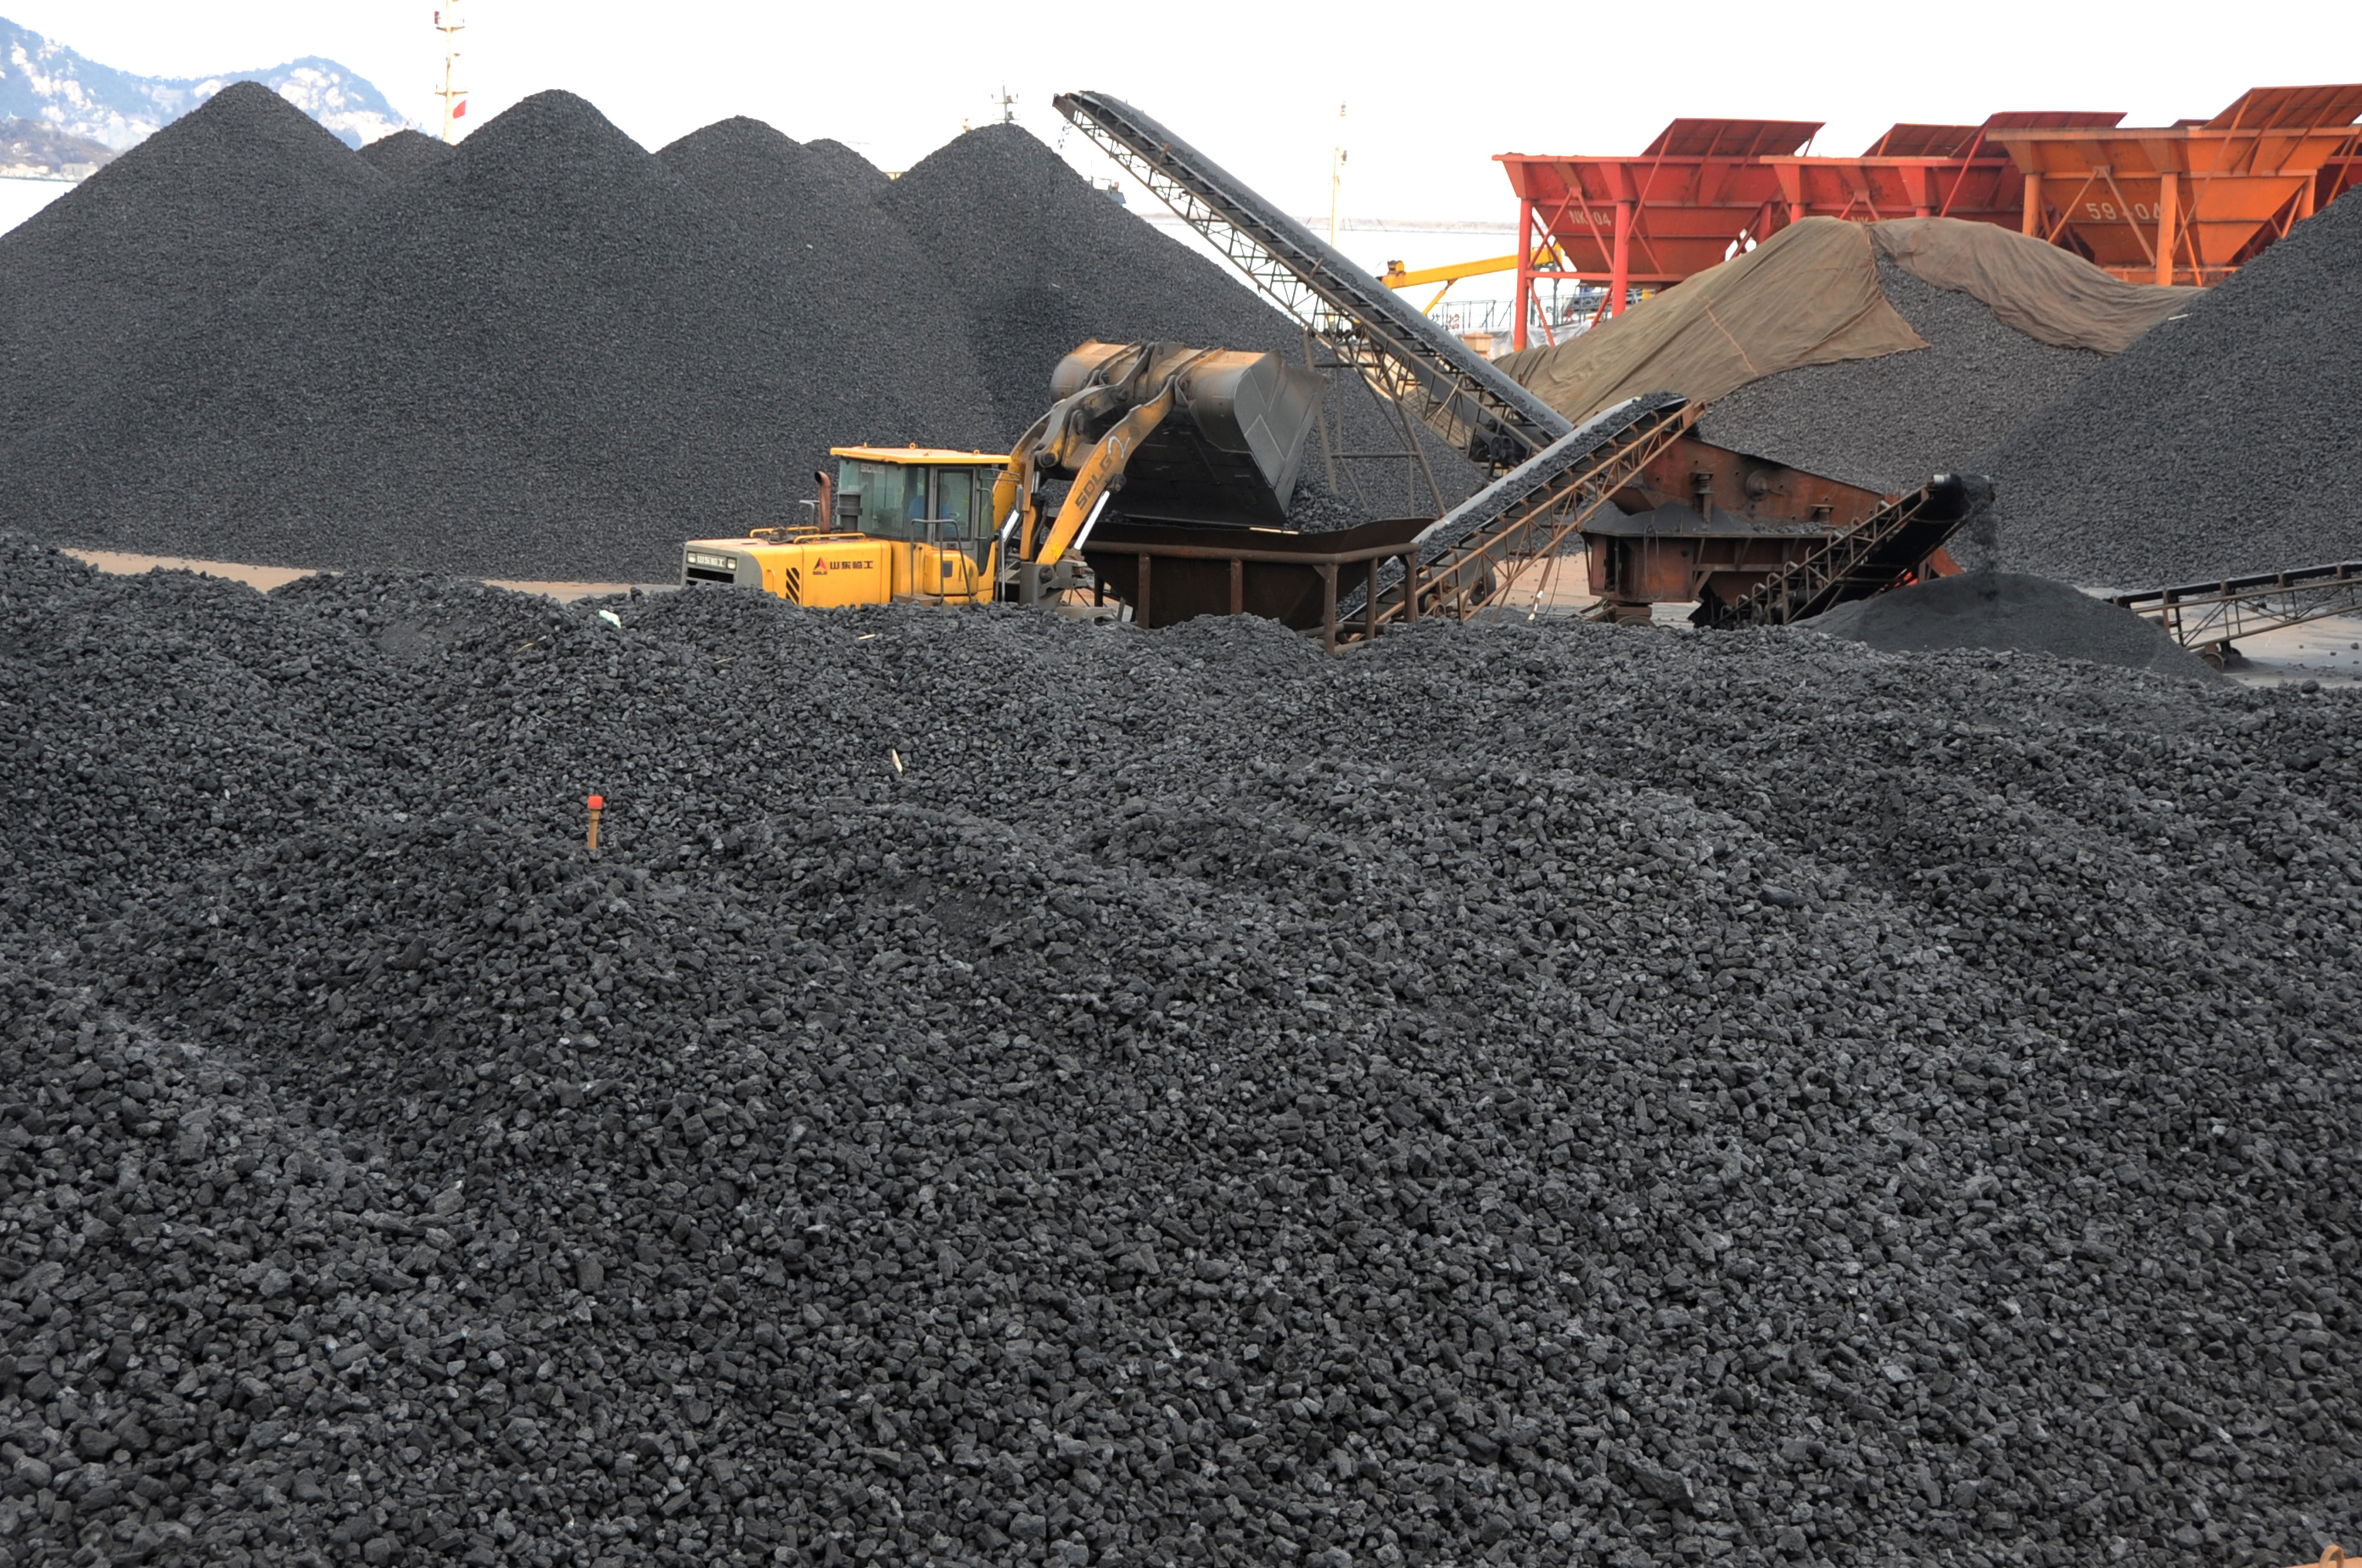 COP26: India, China, U.S. and EU representatives meeting on coal phaseout - delegate | Reuters